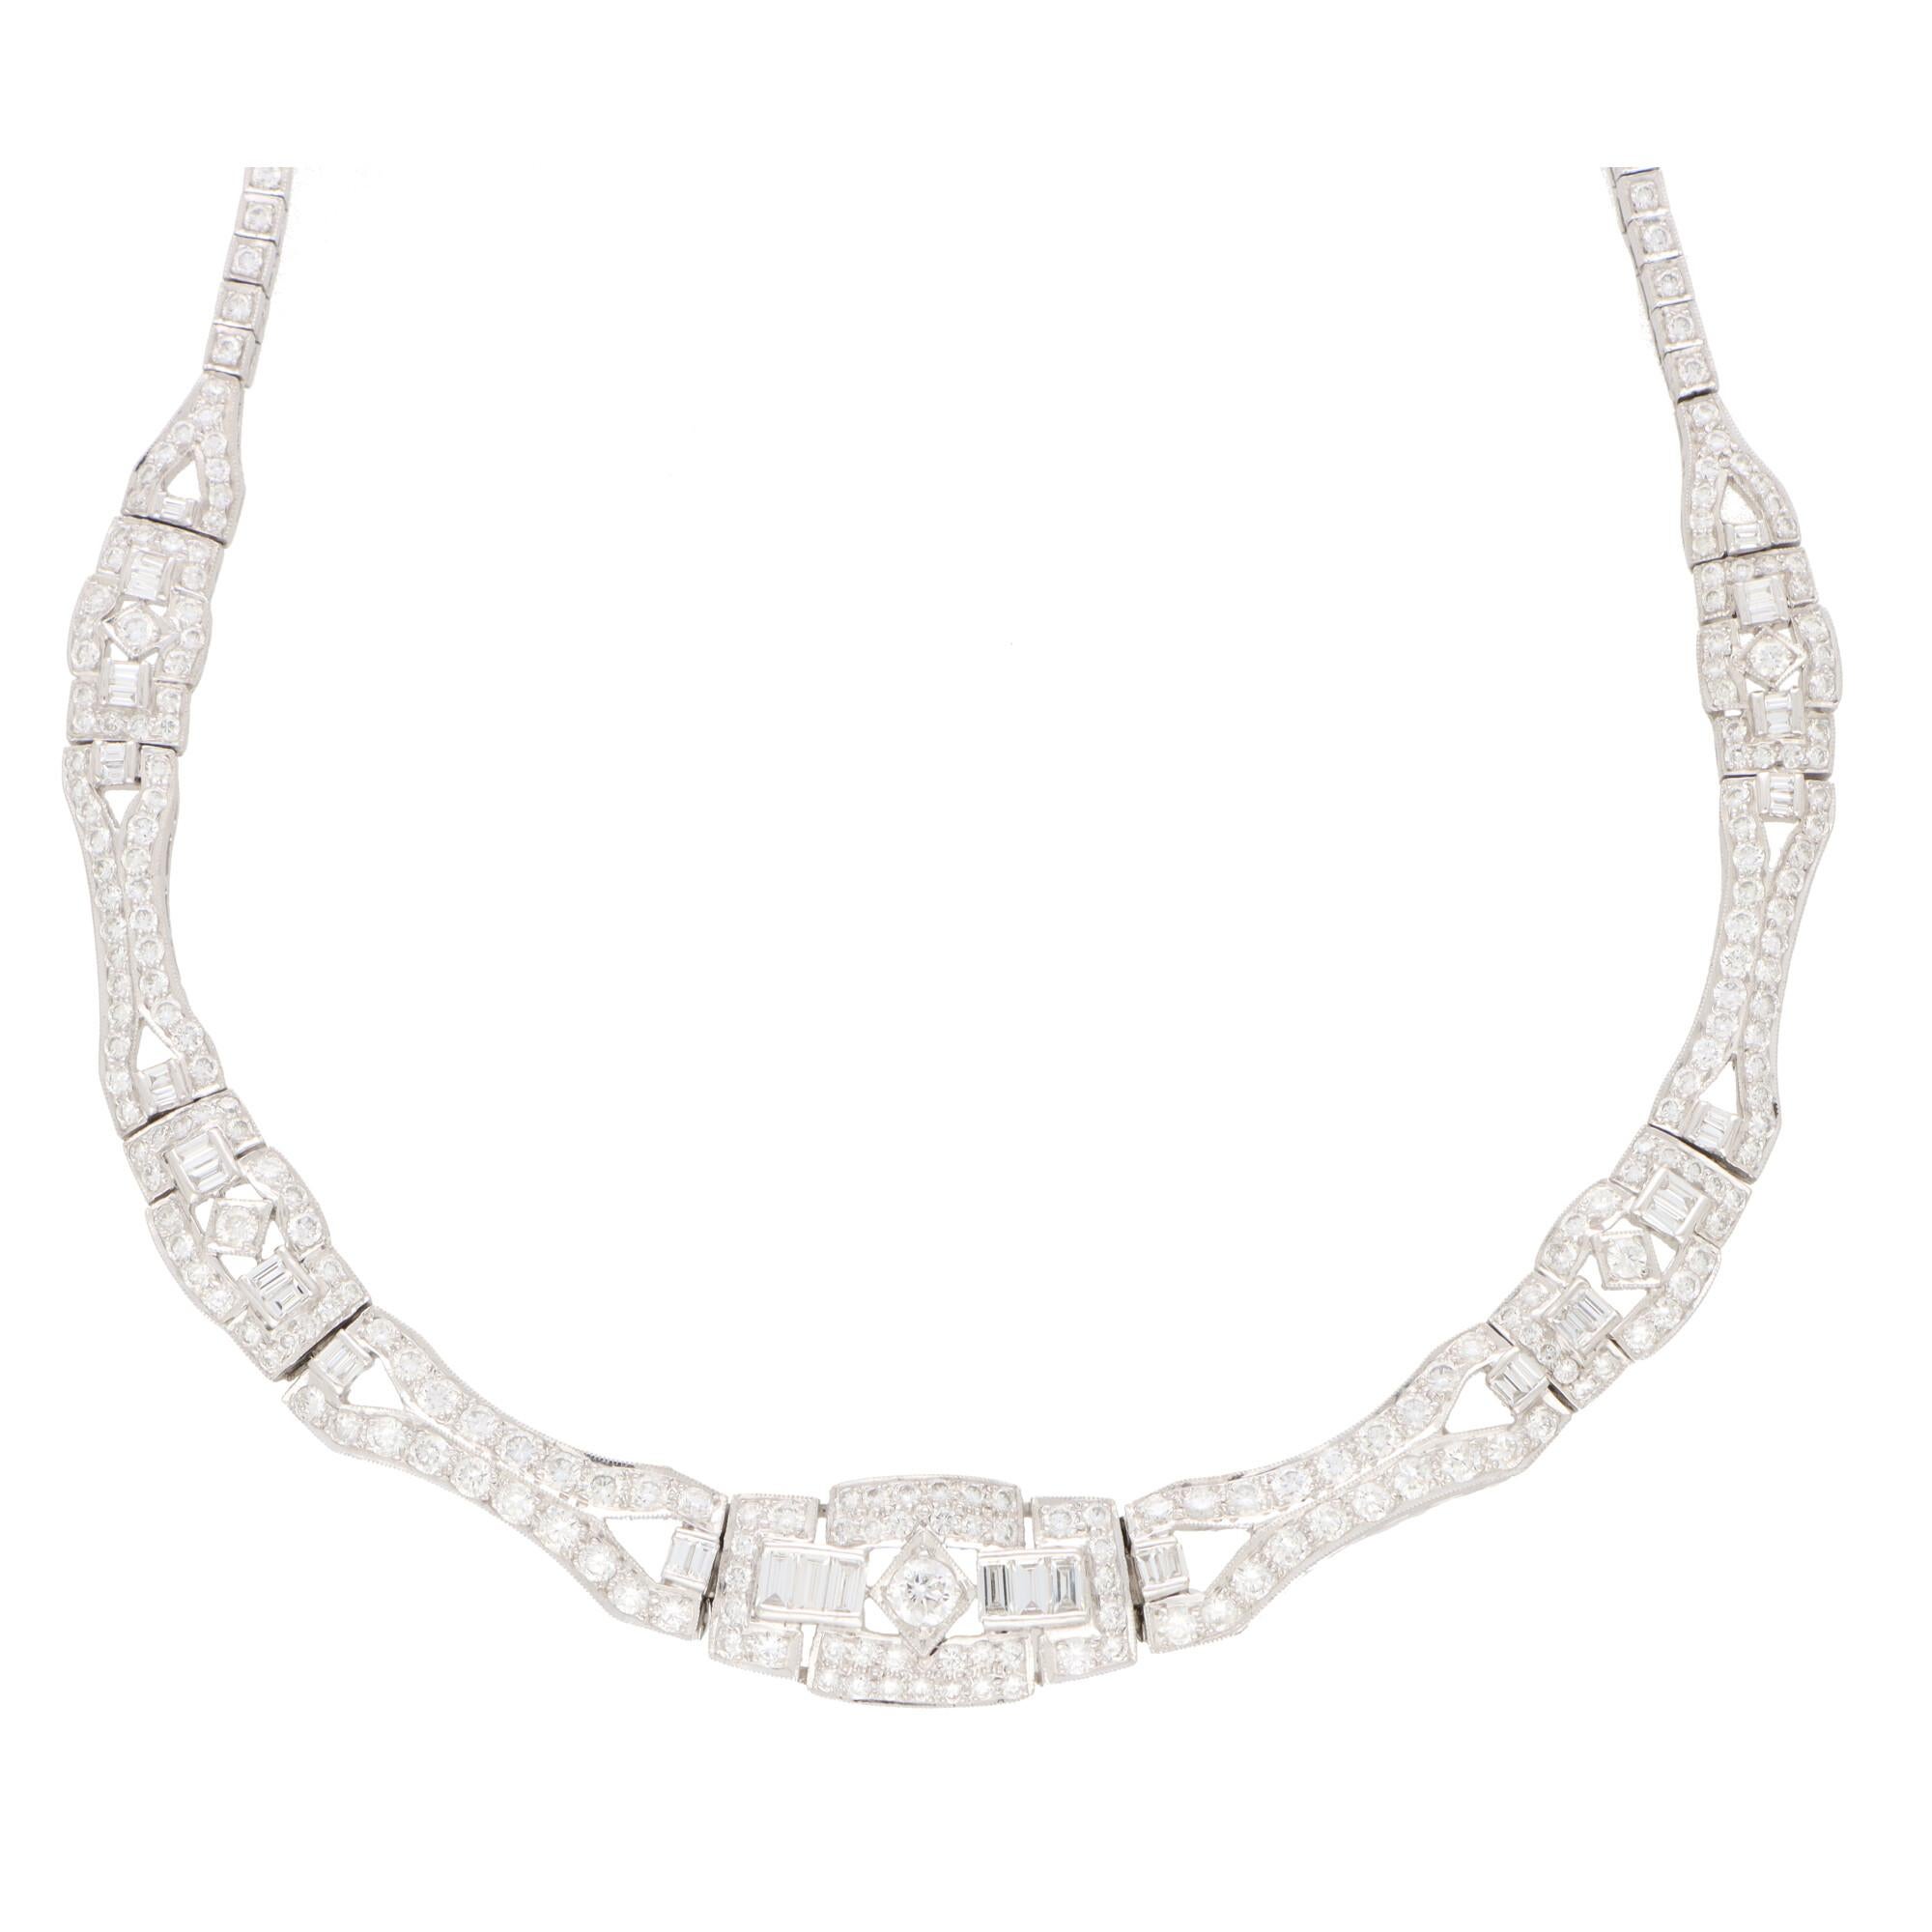 Women's or Men's Art Deco Inspired Diamond Panel Necklace Set in Platinum